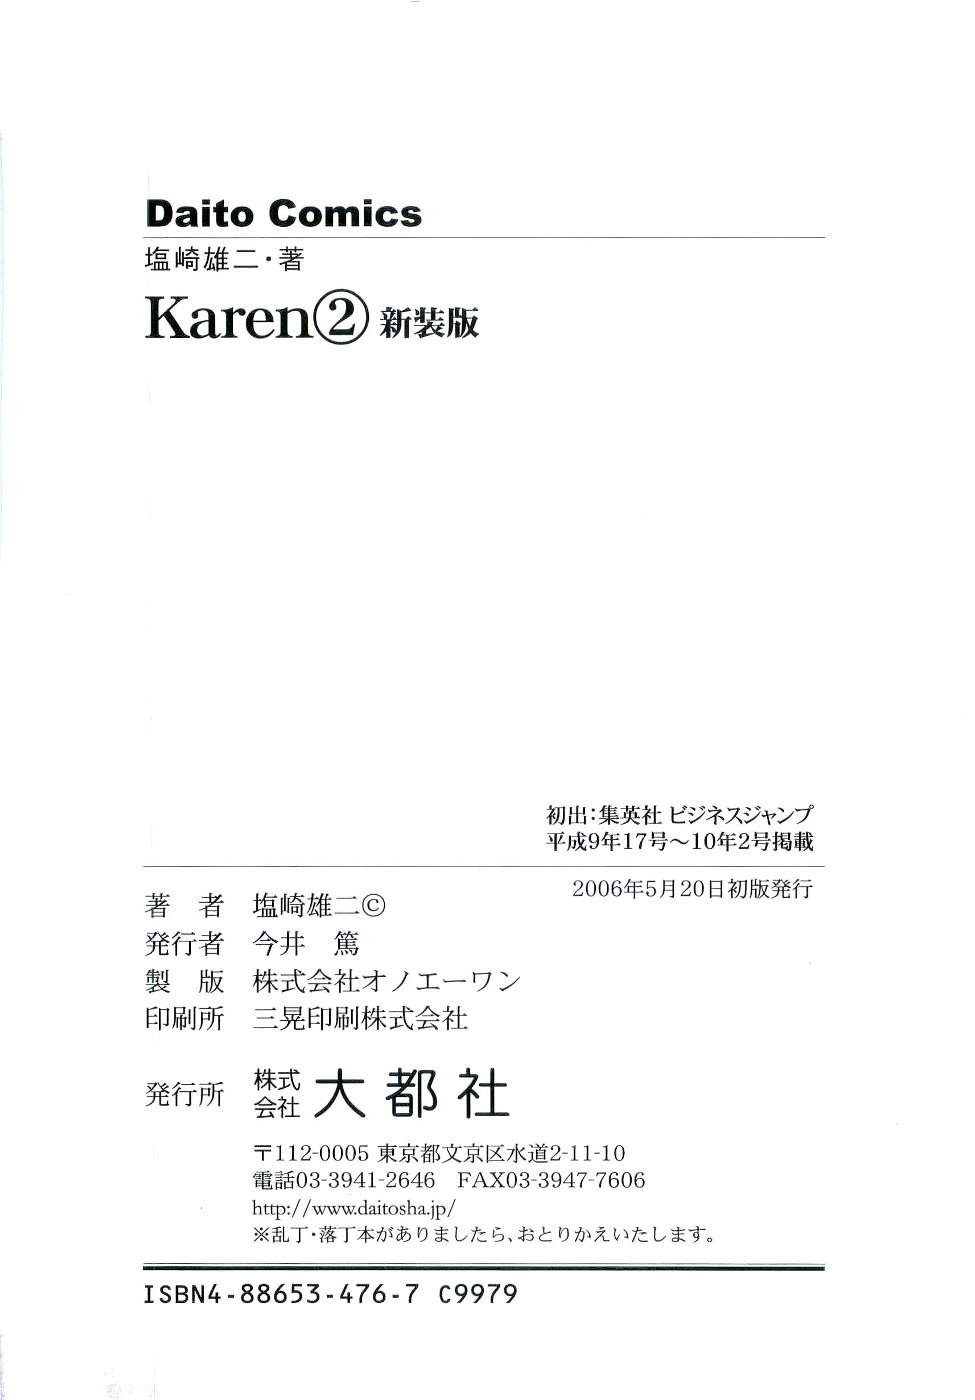 《Karen(日语)》漫画 Karen 02卷